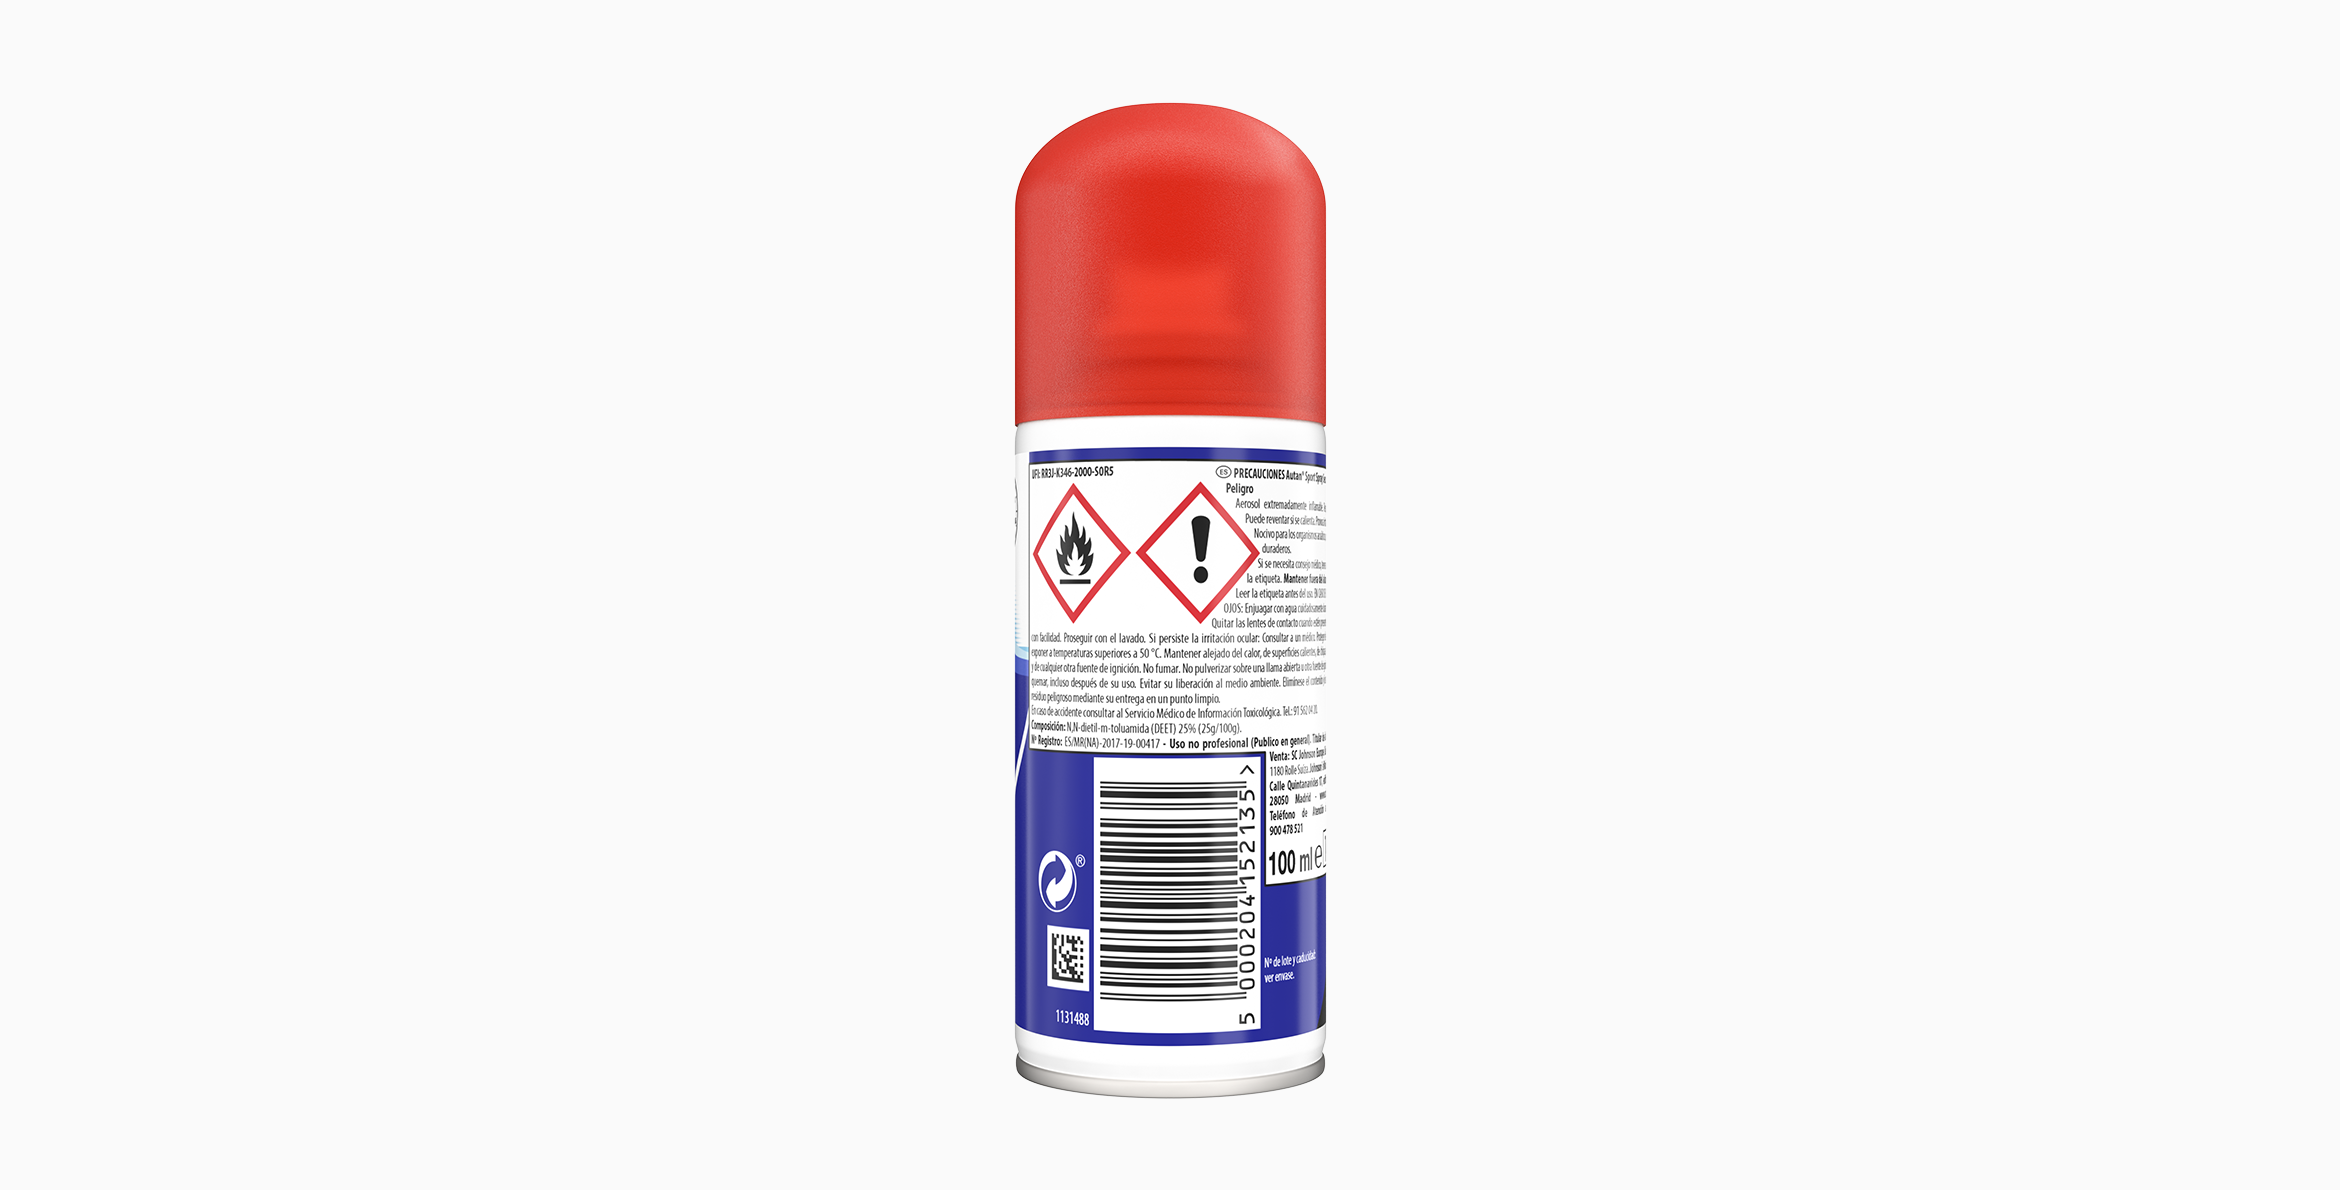 Autan® Sport Dry Spray